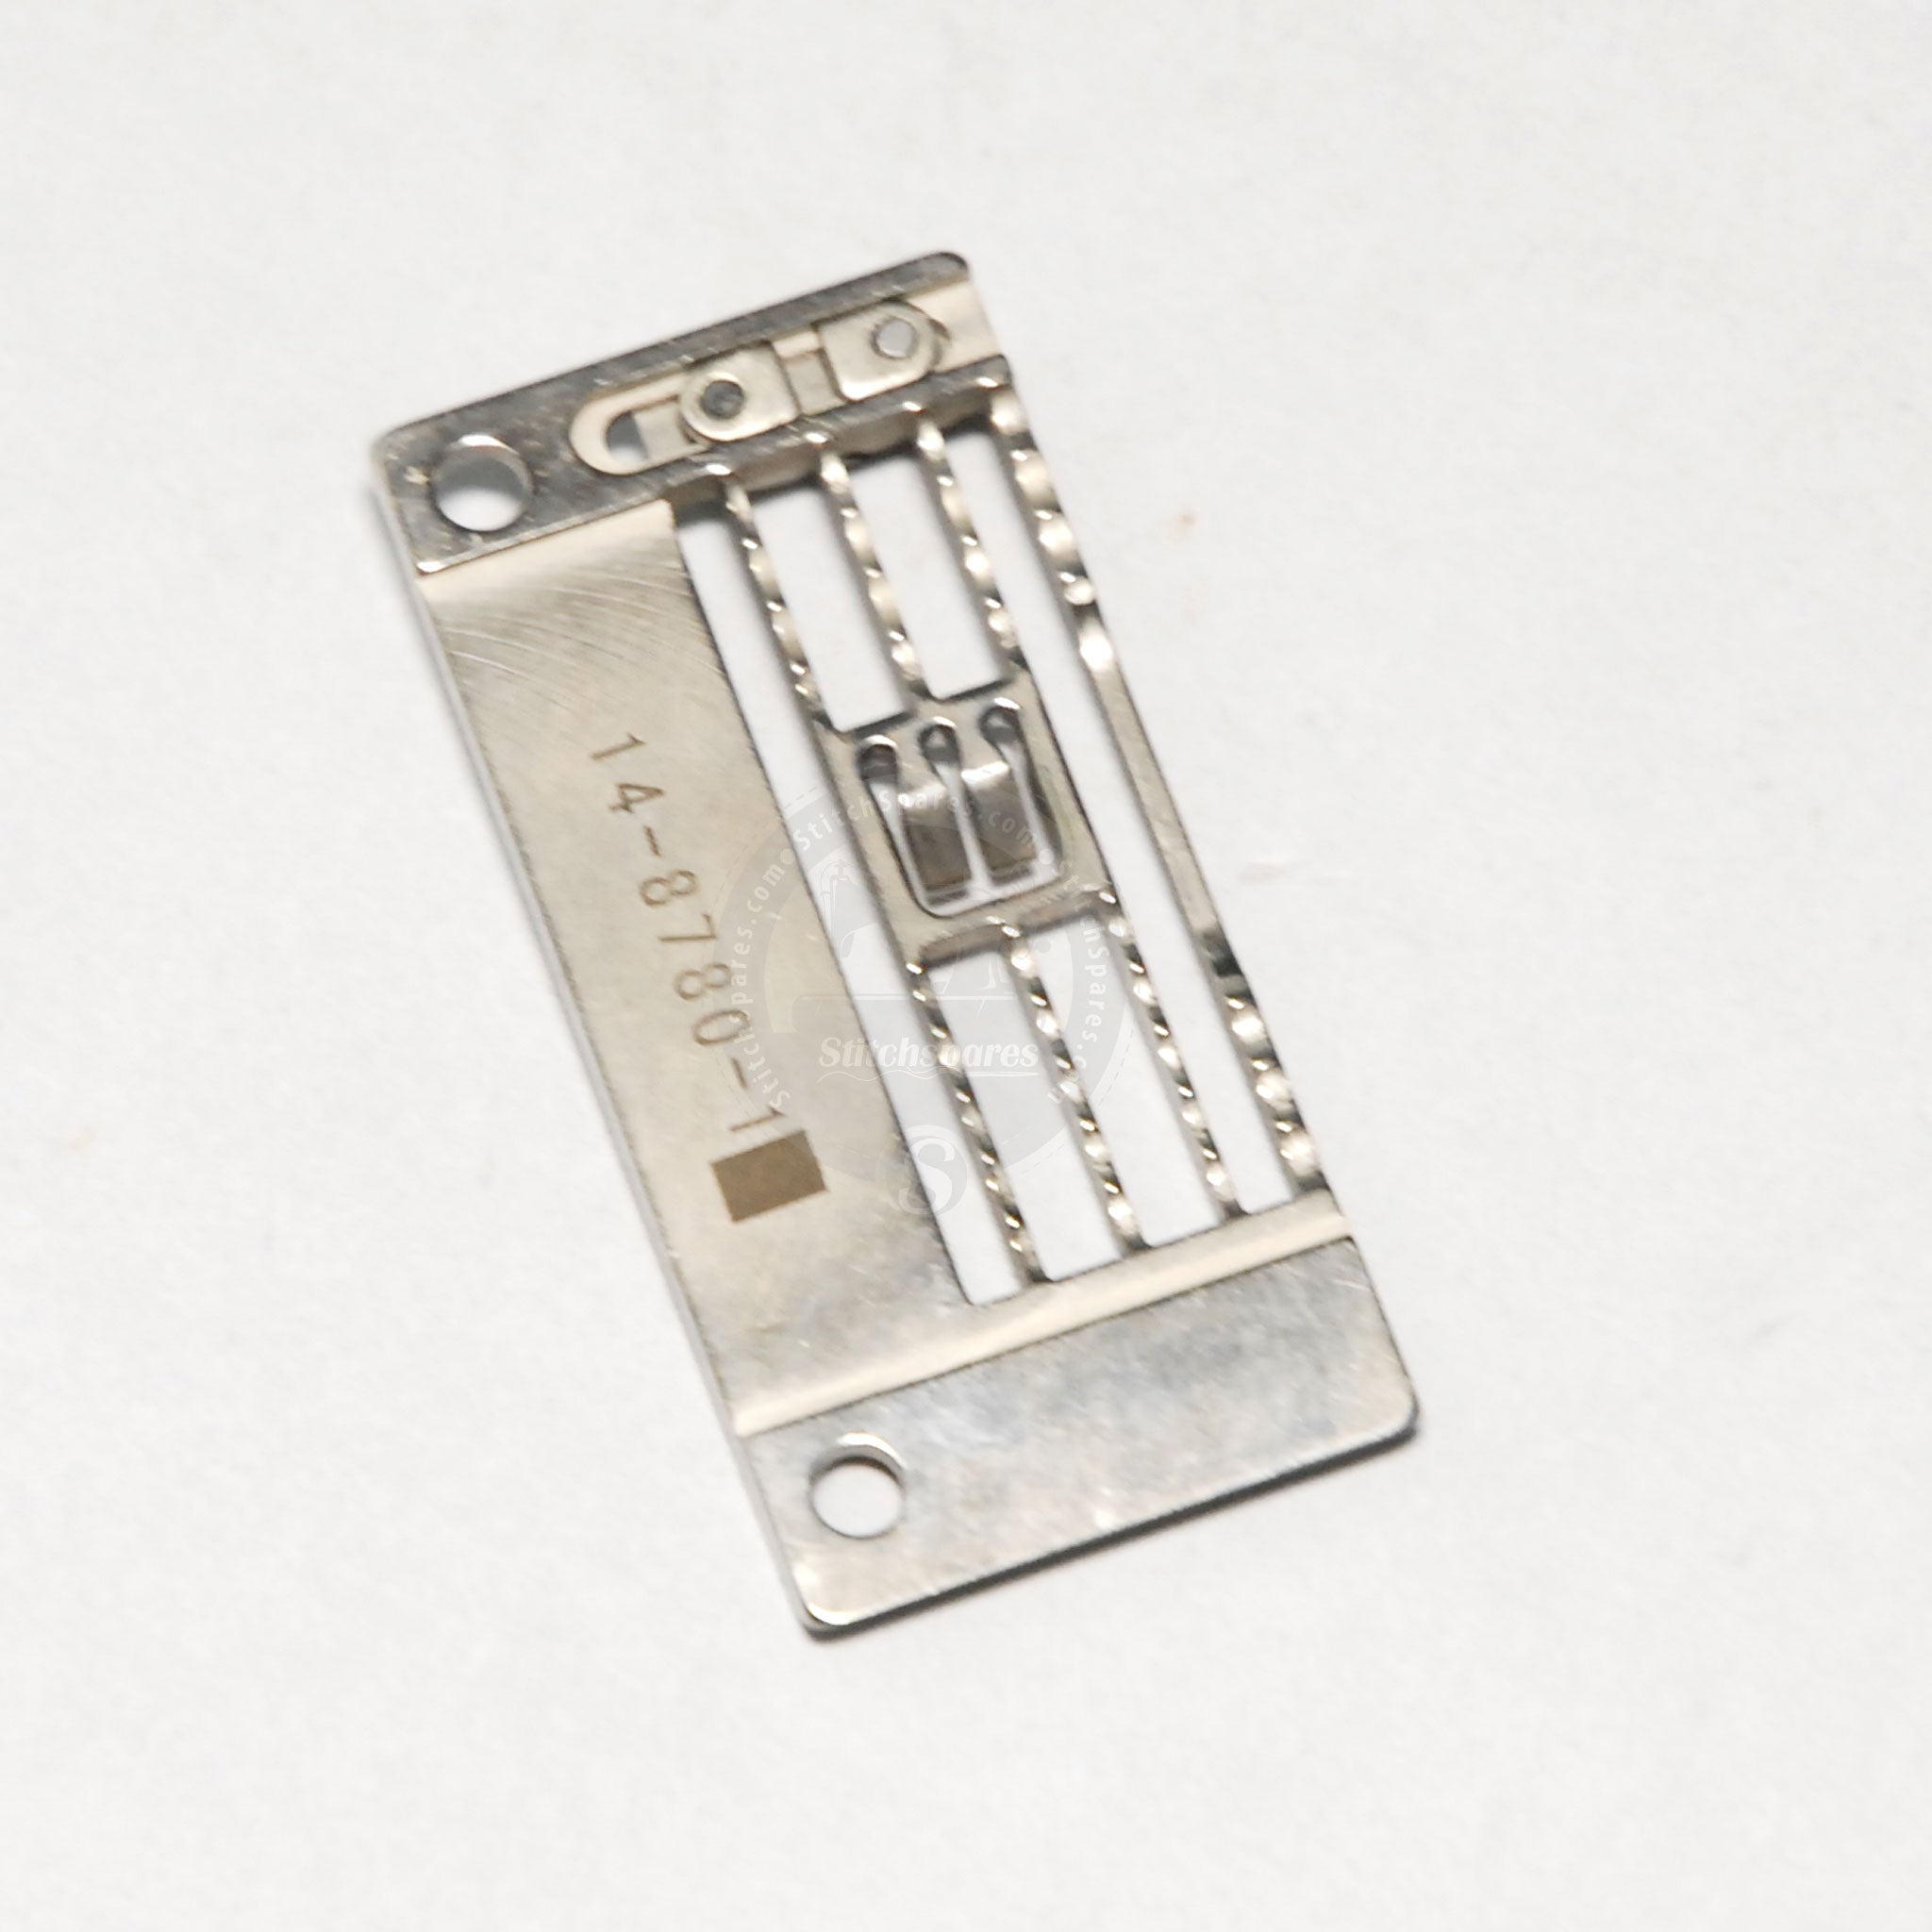 14-8780-1 Placa de aguja Kansai Flatbed Interlock (Flatlock) Machine